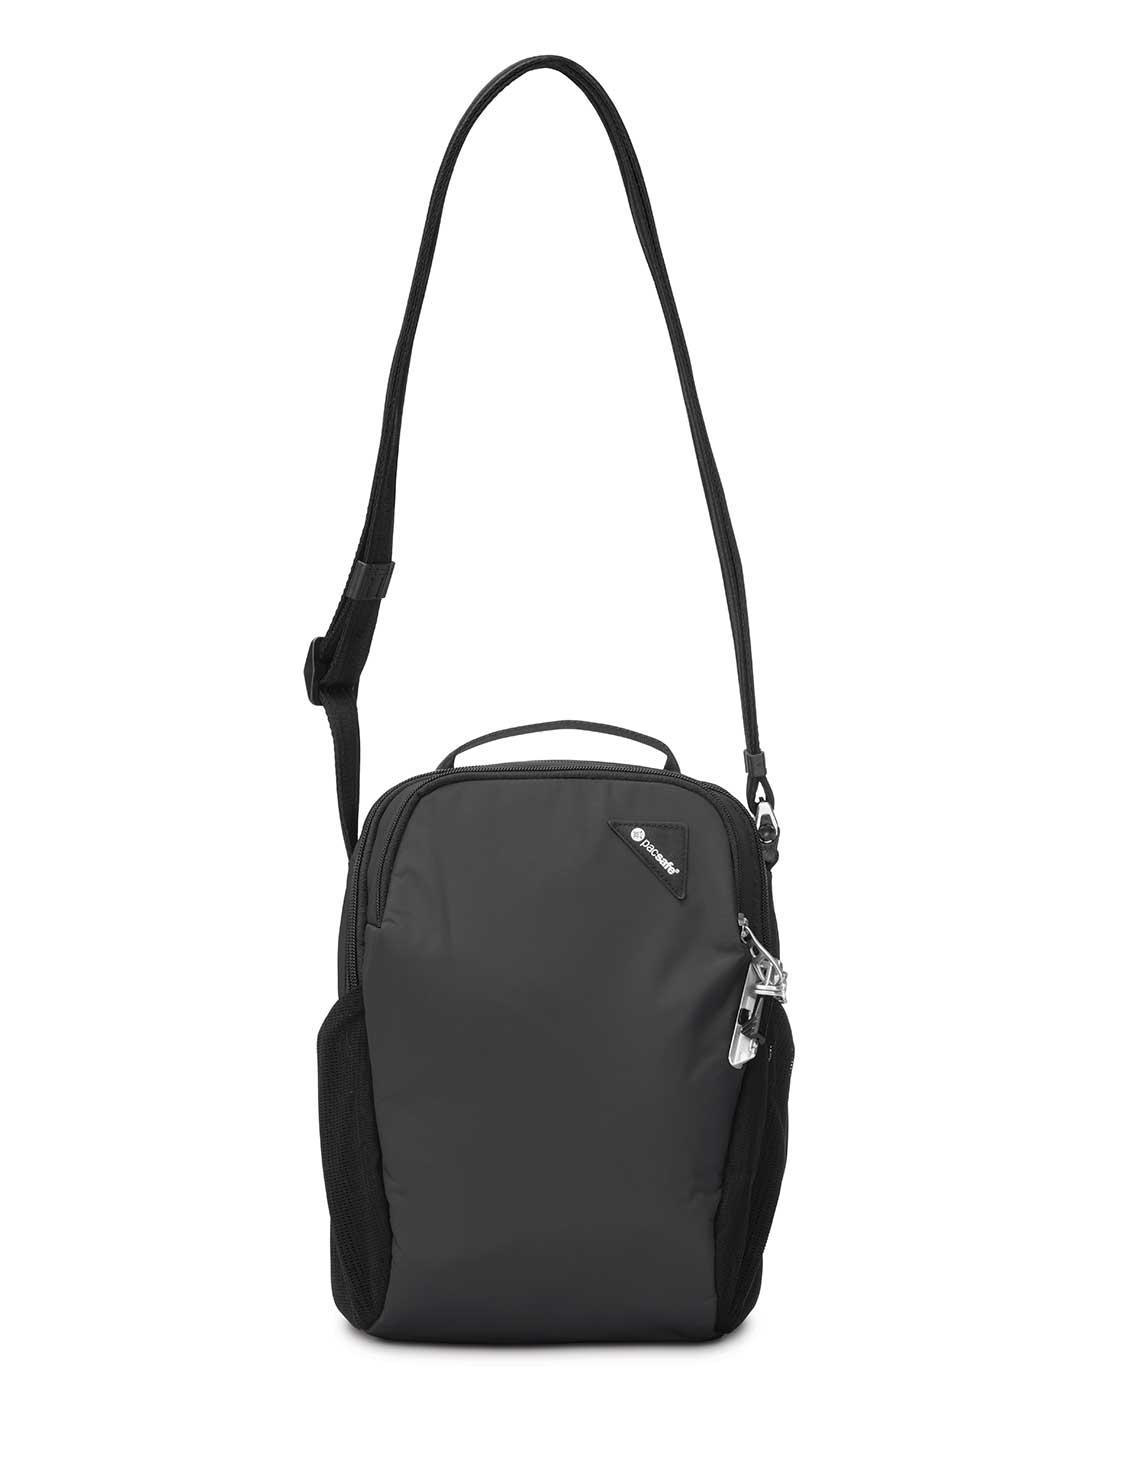 Pacsafe Vibe 200 anti-theft compact travel bag